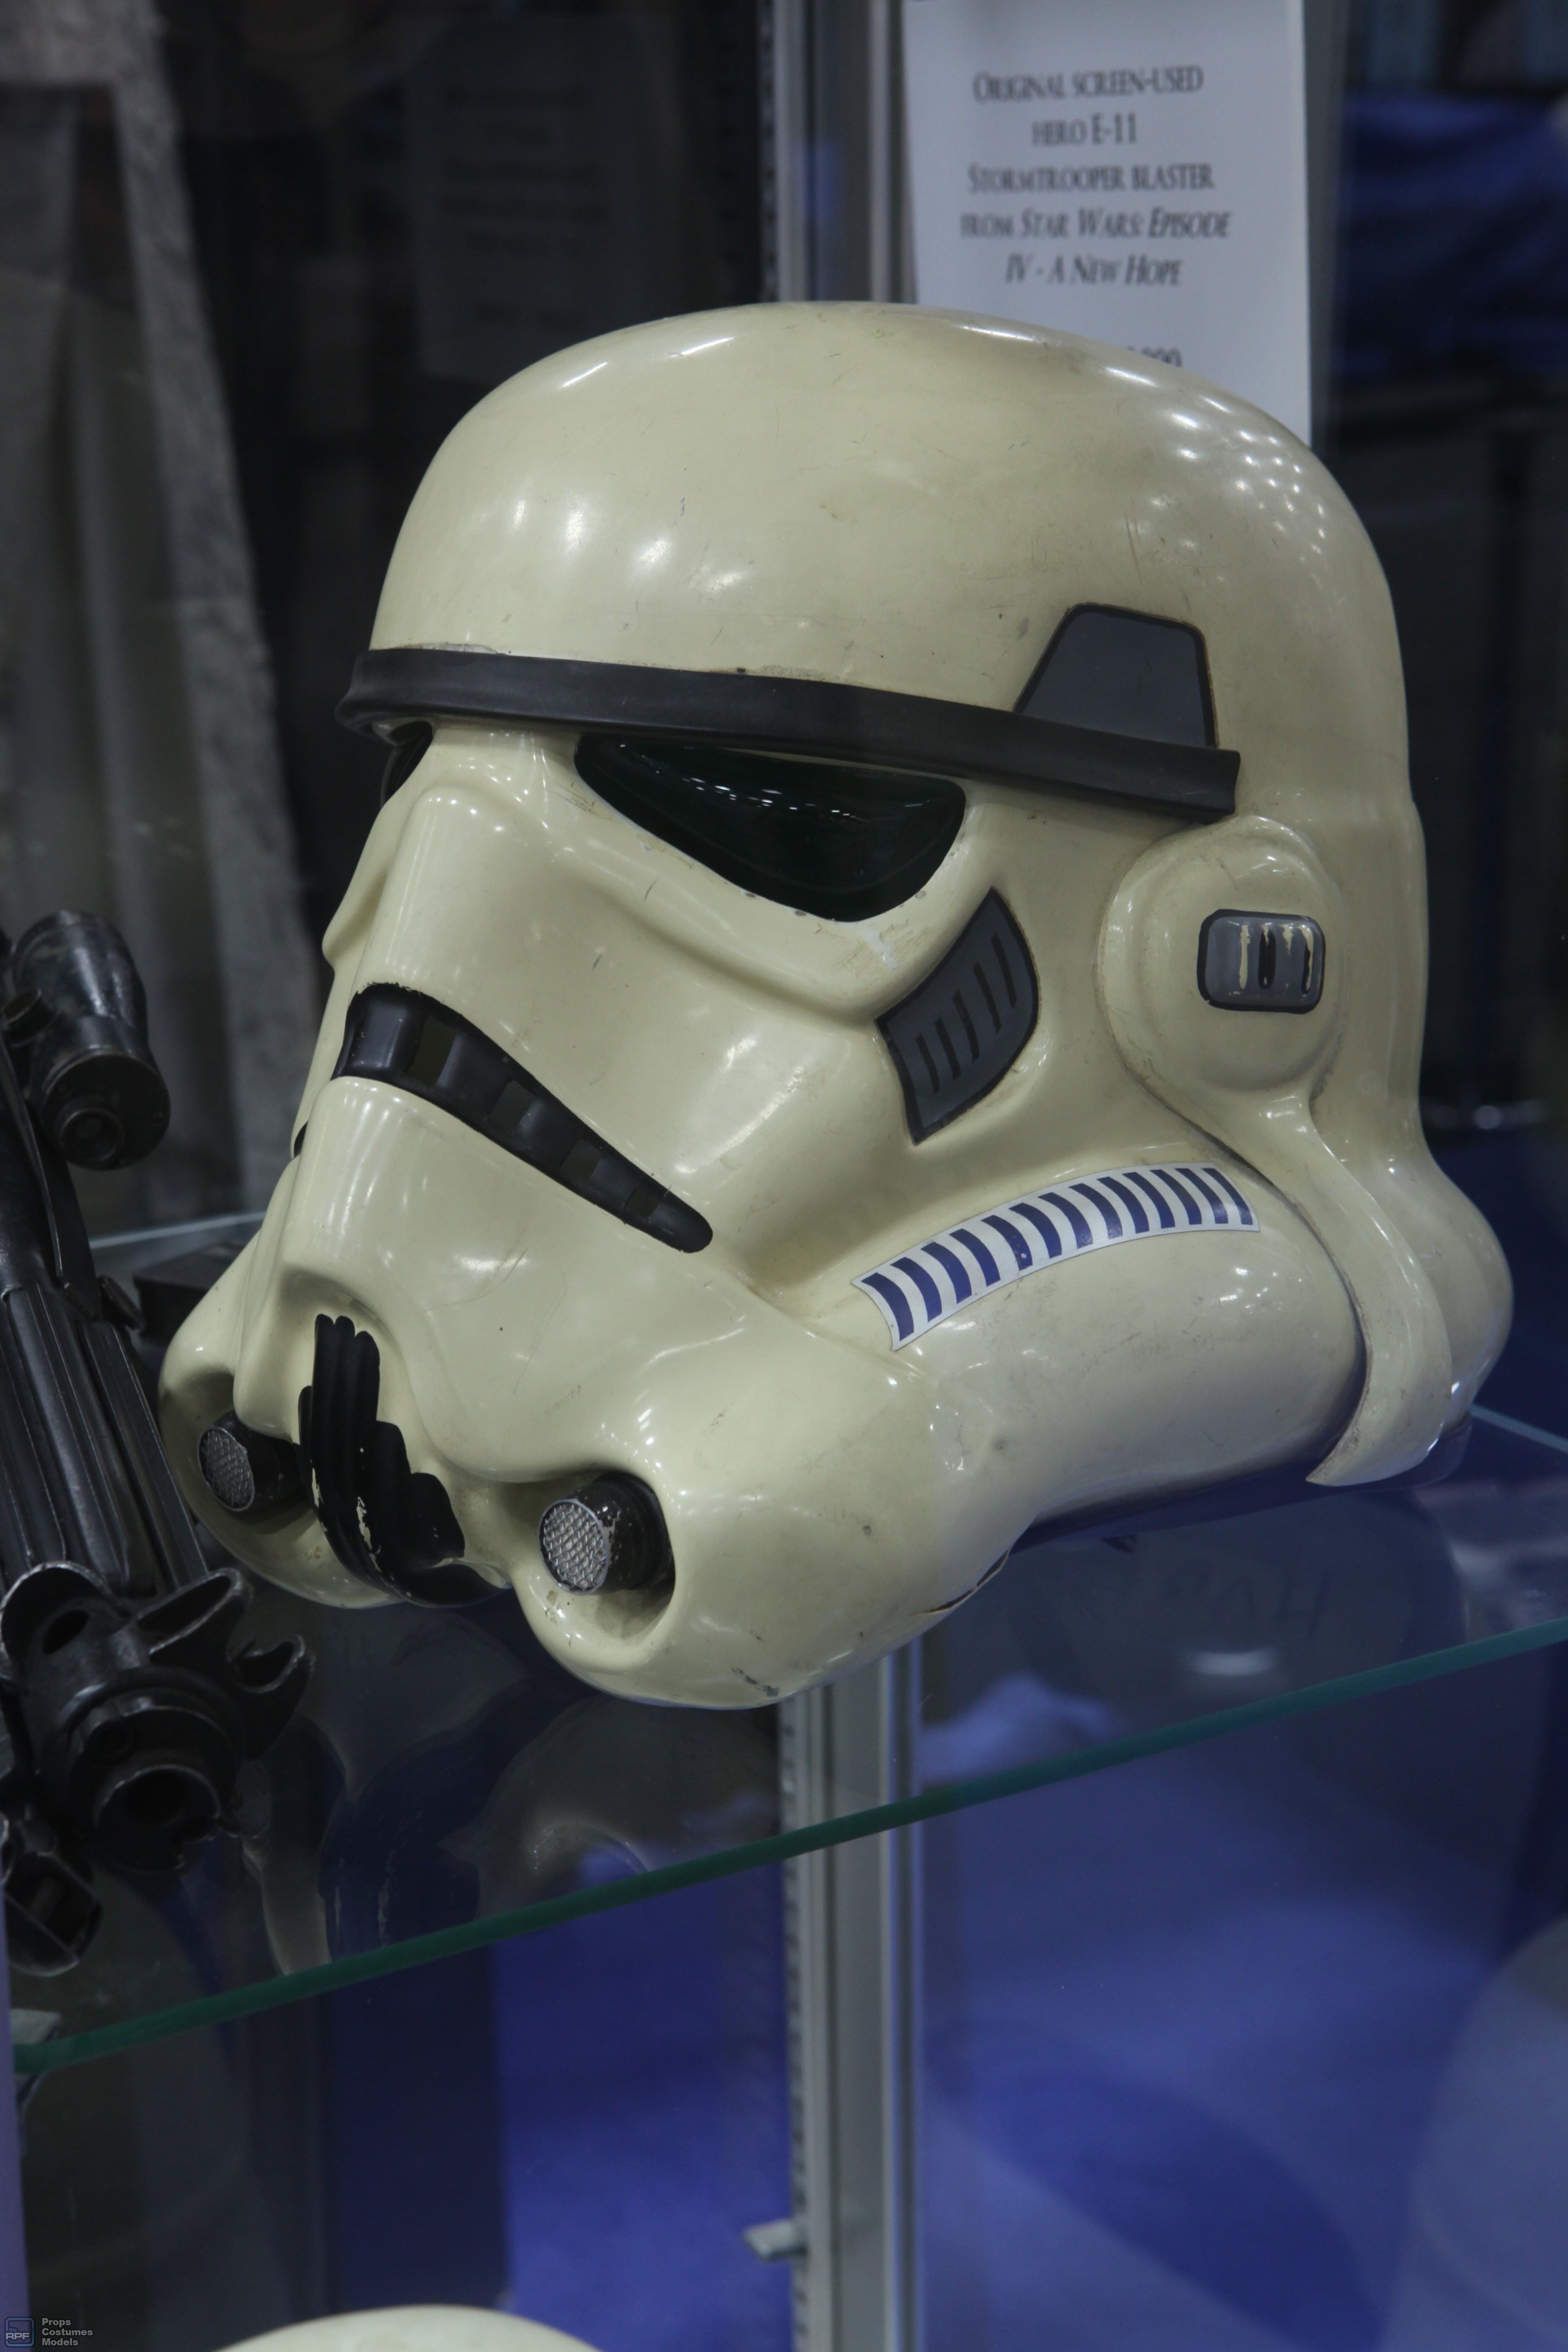 Stormtrooper helmet from Return of the Jedi